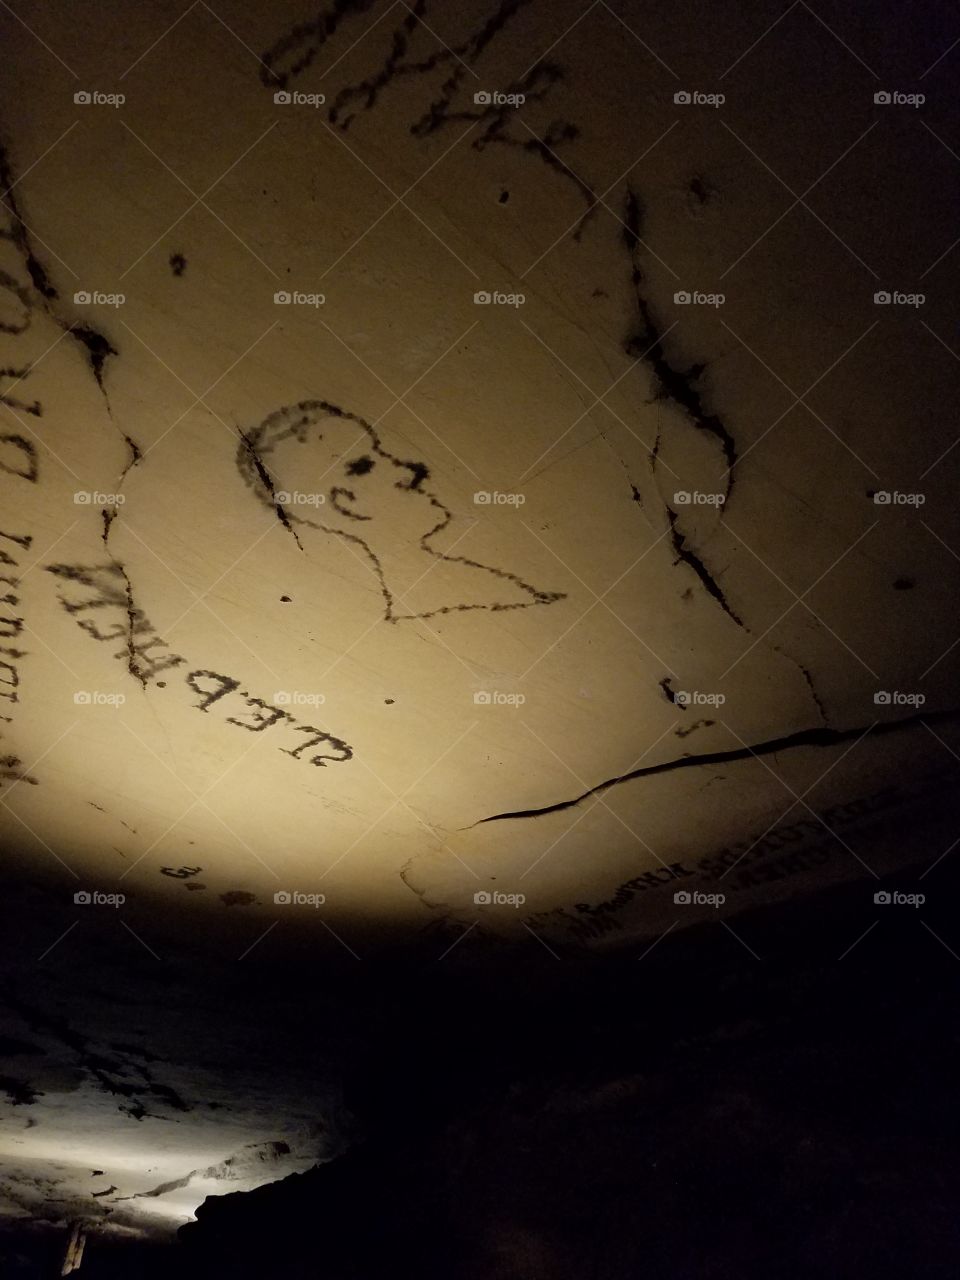 Mammoth Cave Portrait Drawn with Smoke